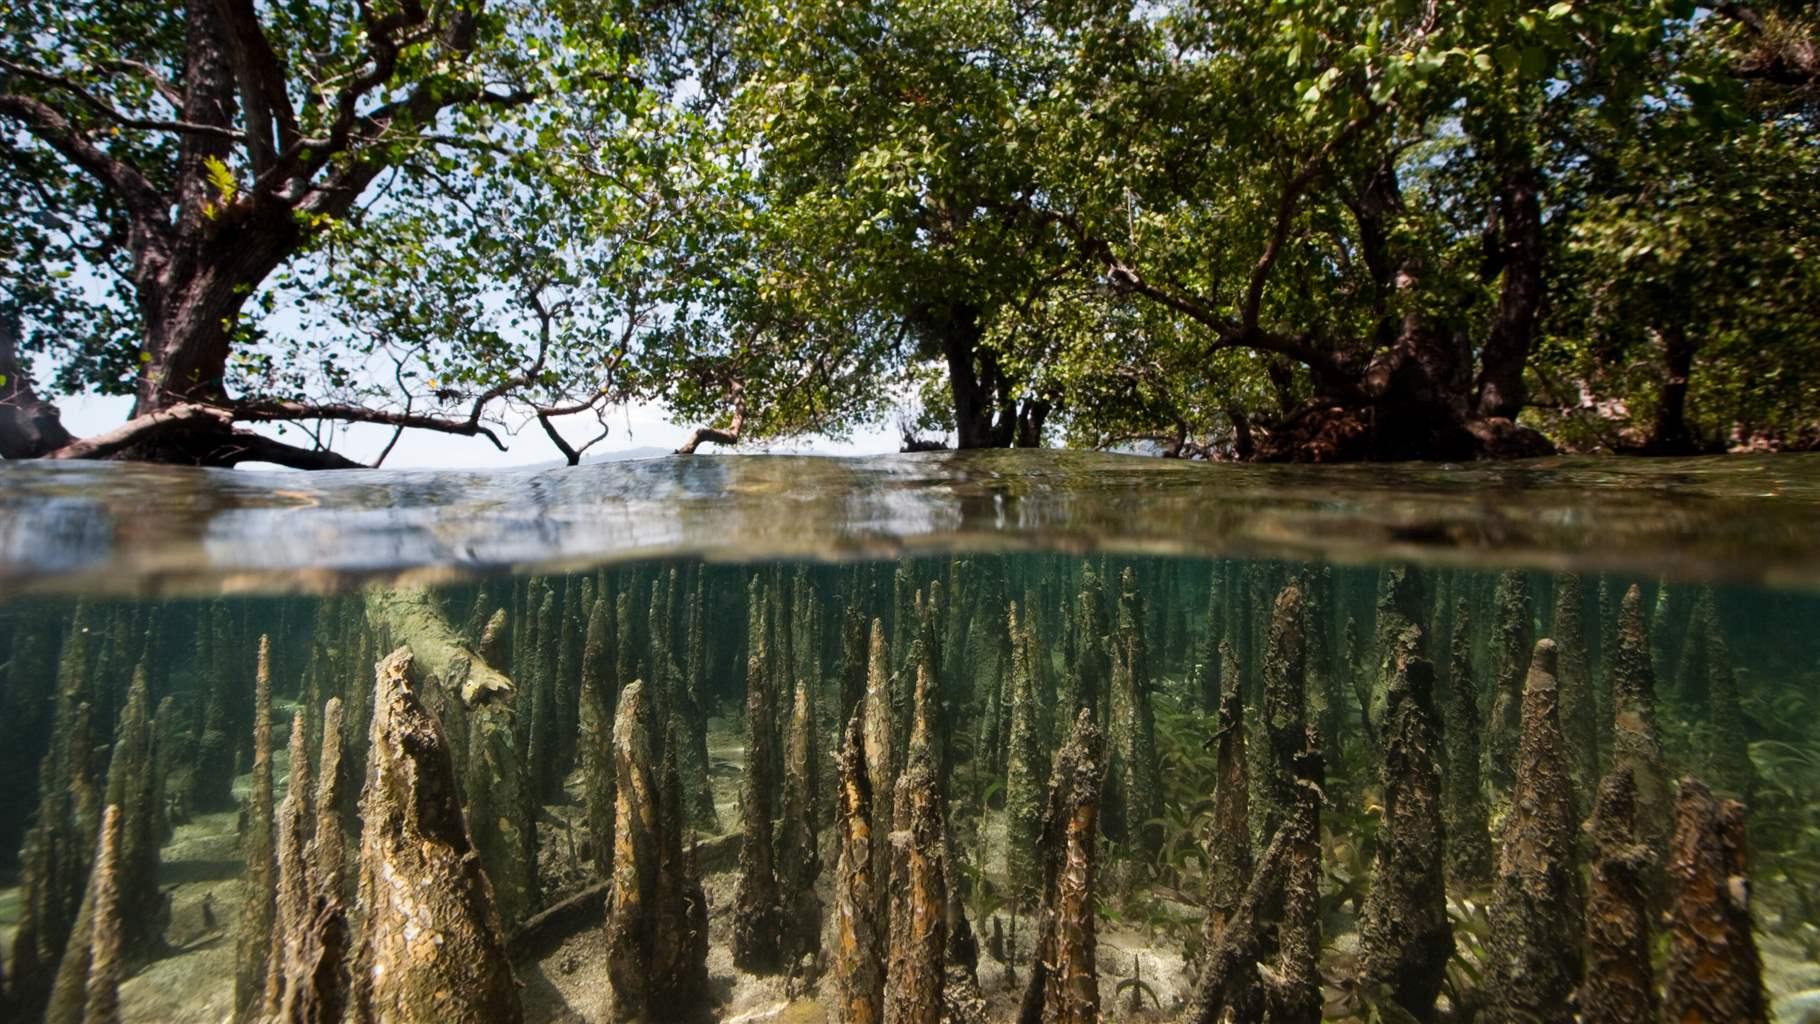 Mangroves at high tide